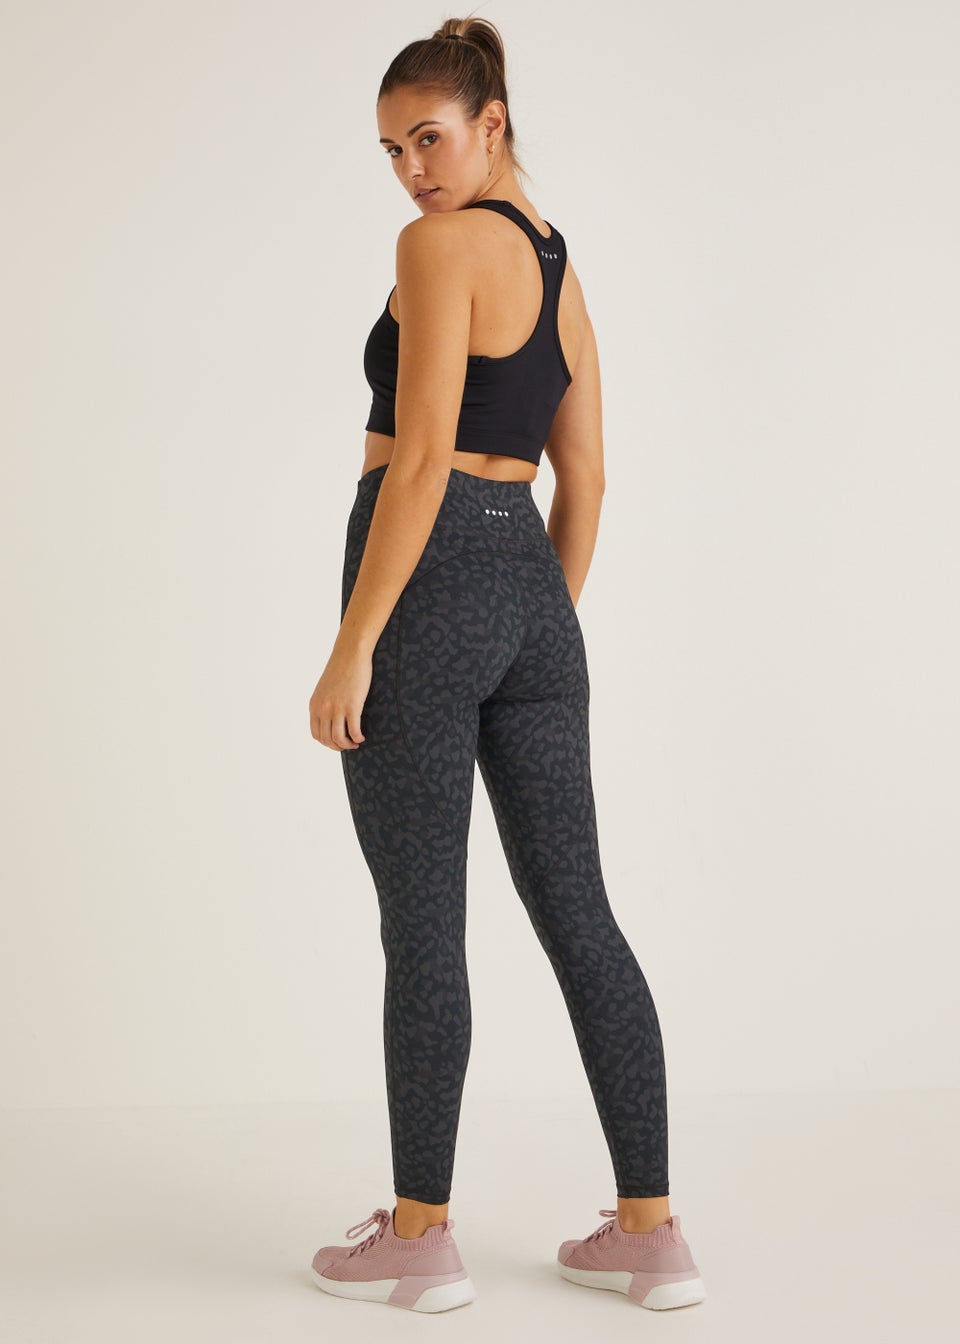 Seamless sports tights - Dark grey/Leopard print - Ladies | H&M IN